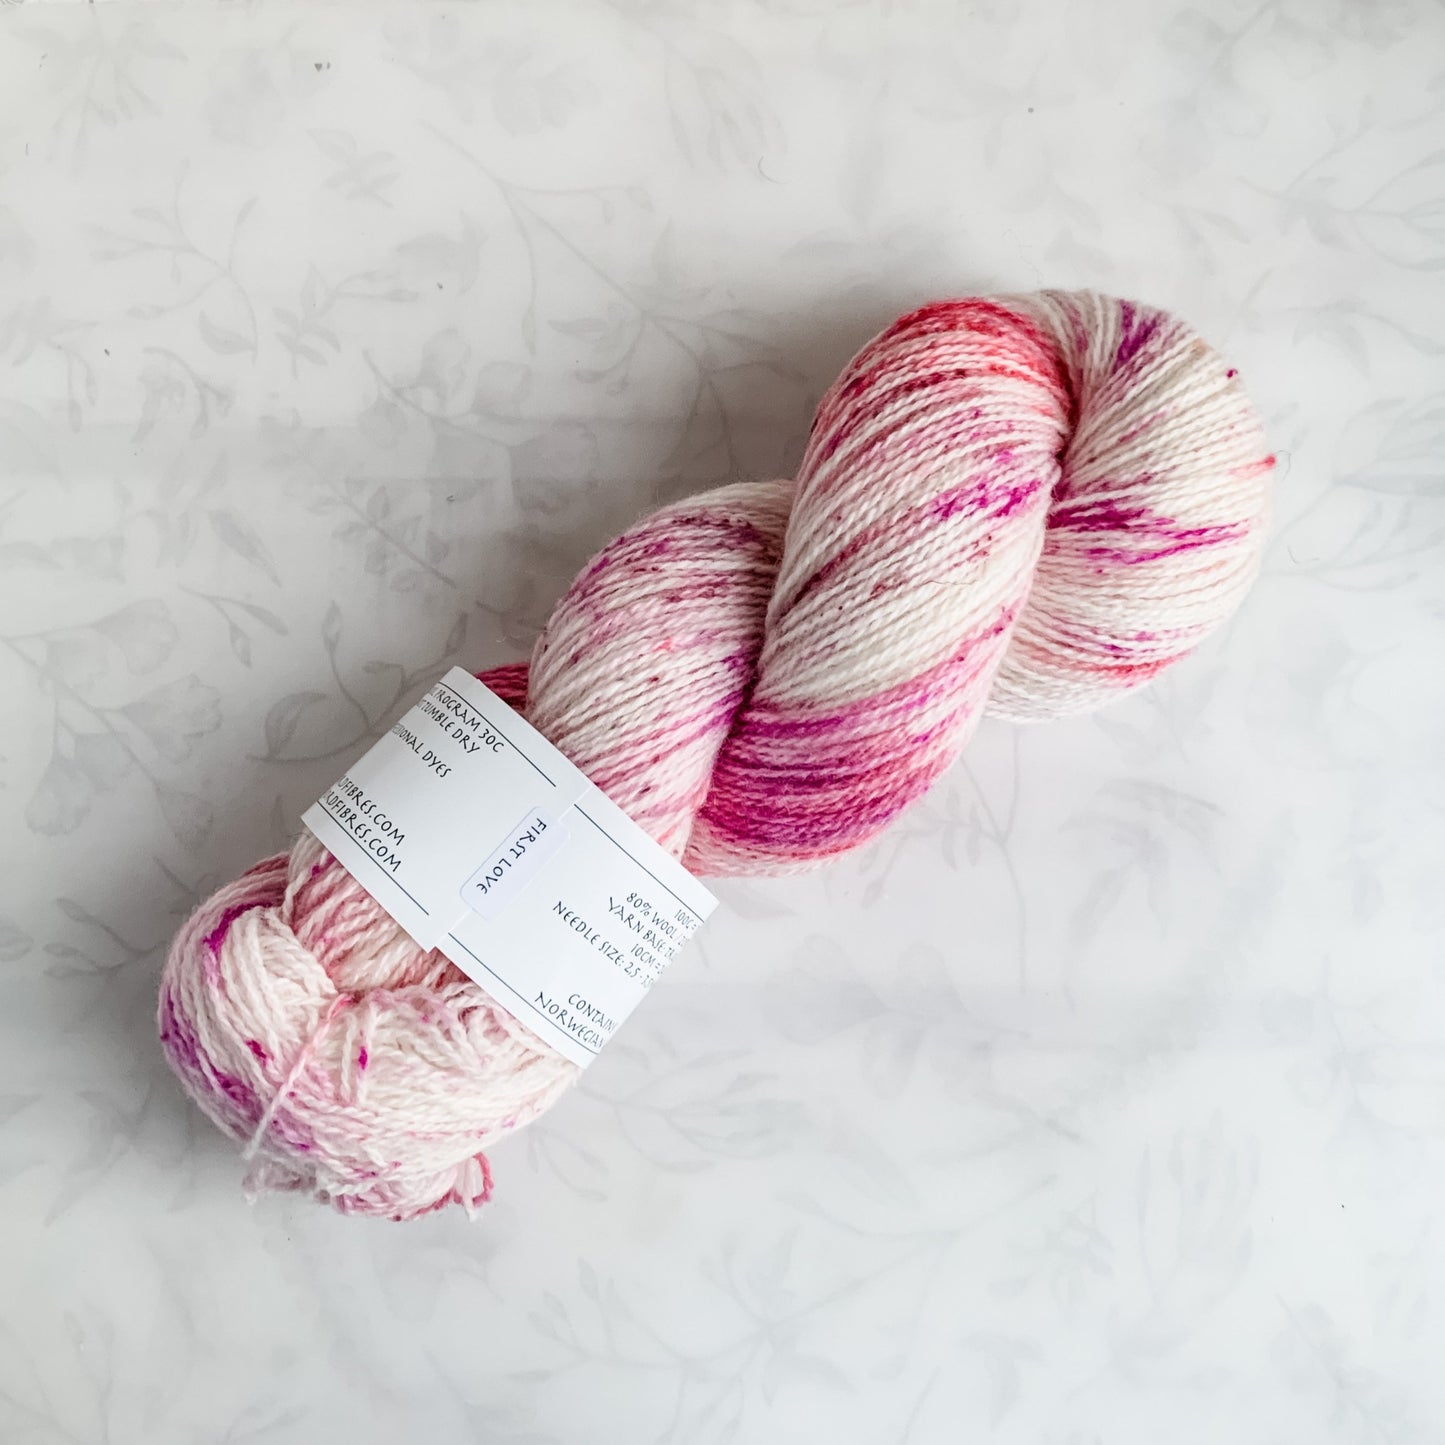 First Love - Trollfjord sock - Hand Dyed Yarn - Variegated Yarn